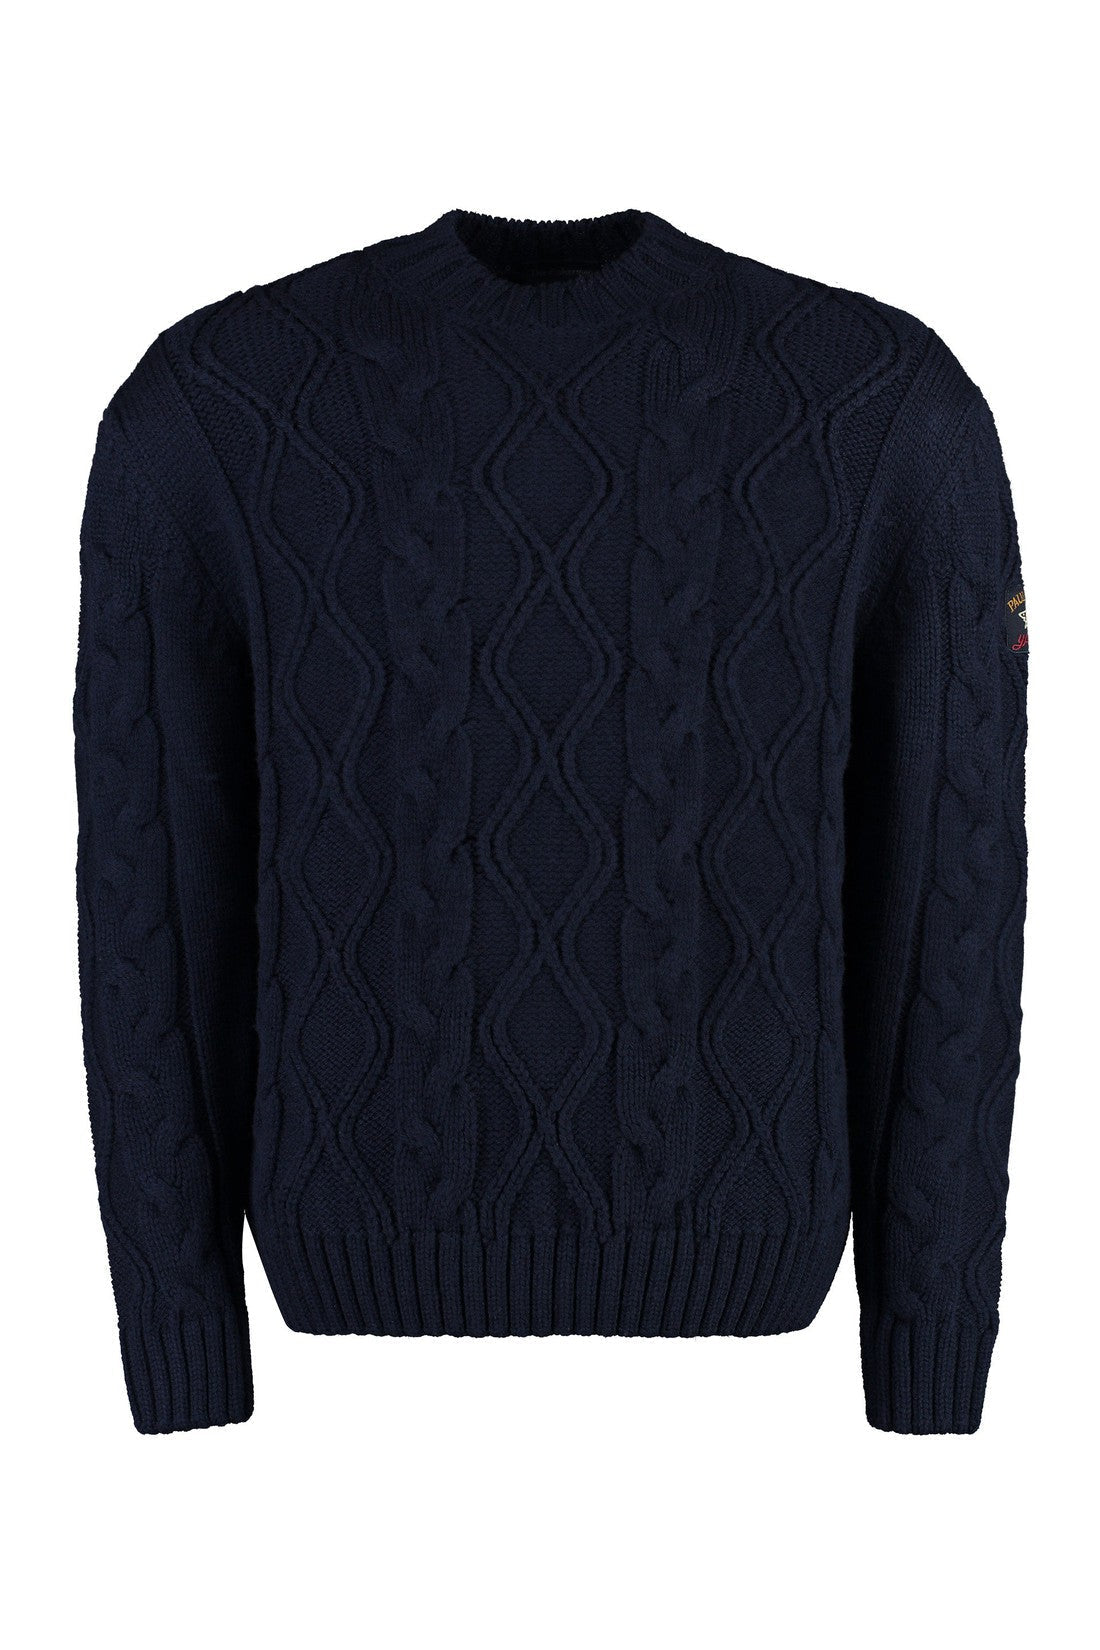 Piralo-OUTLET-SALE-Cable knit sweater-ARCHIVIST